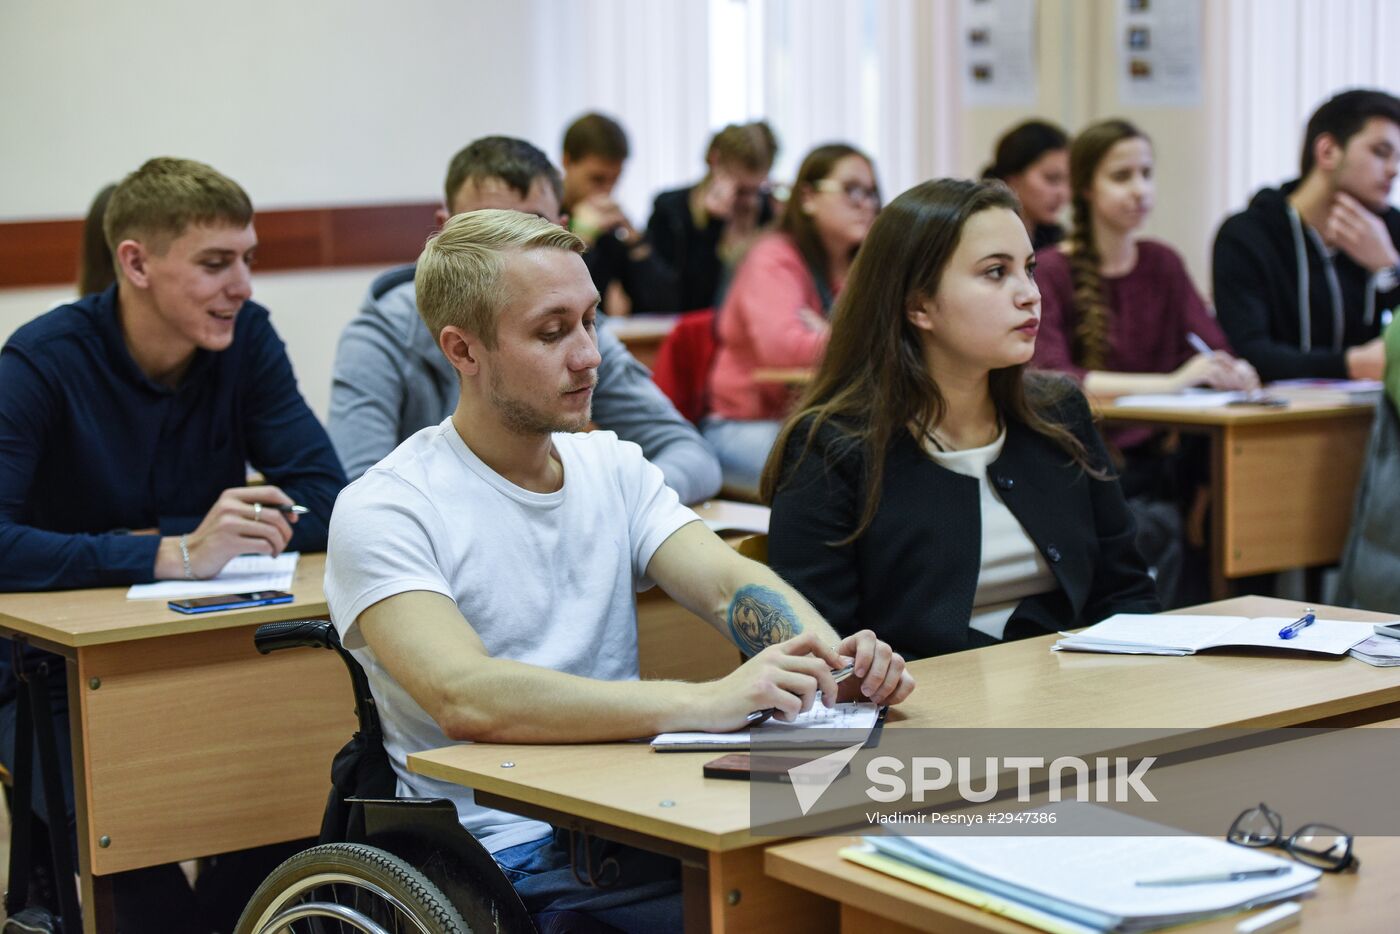 Moscow State Humanitarian-Economic University